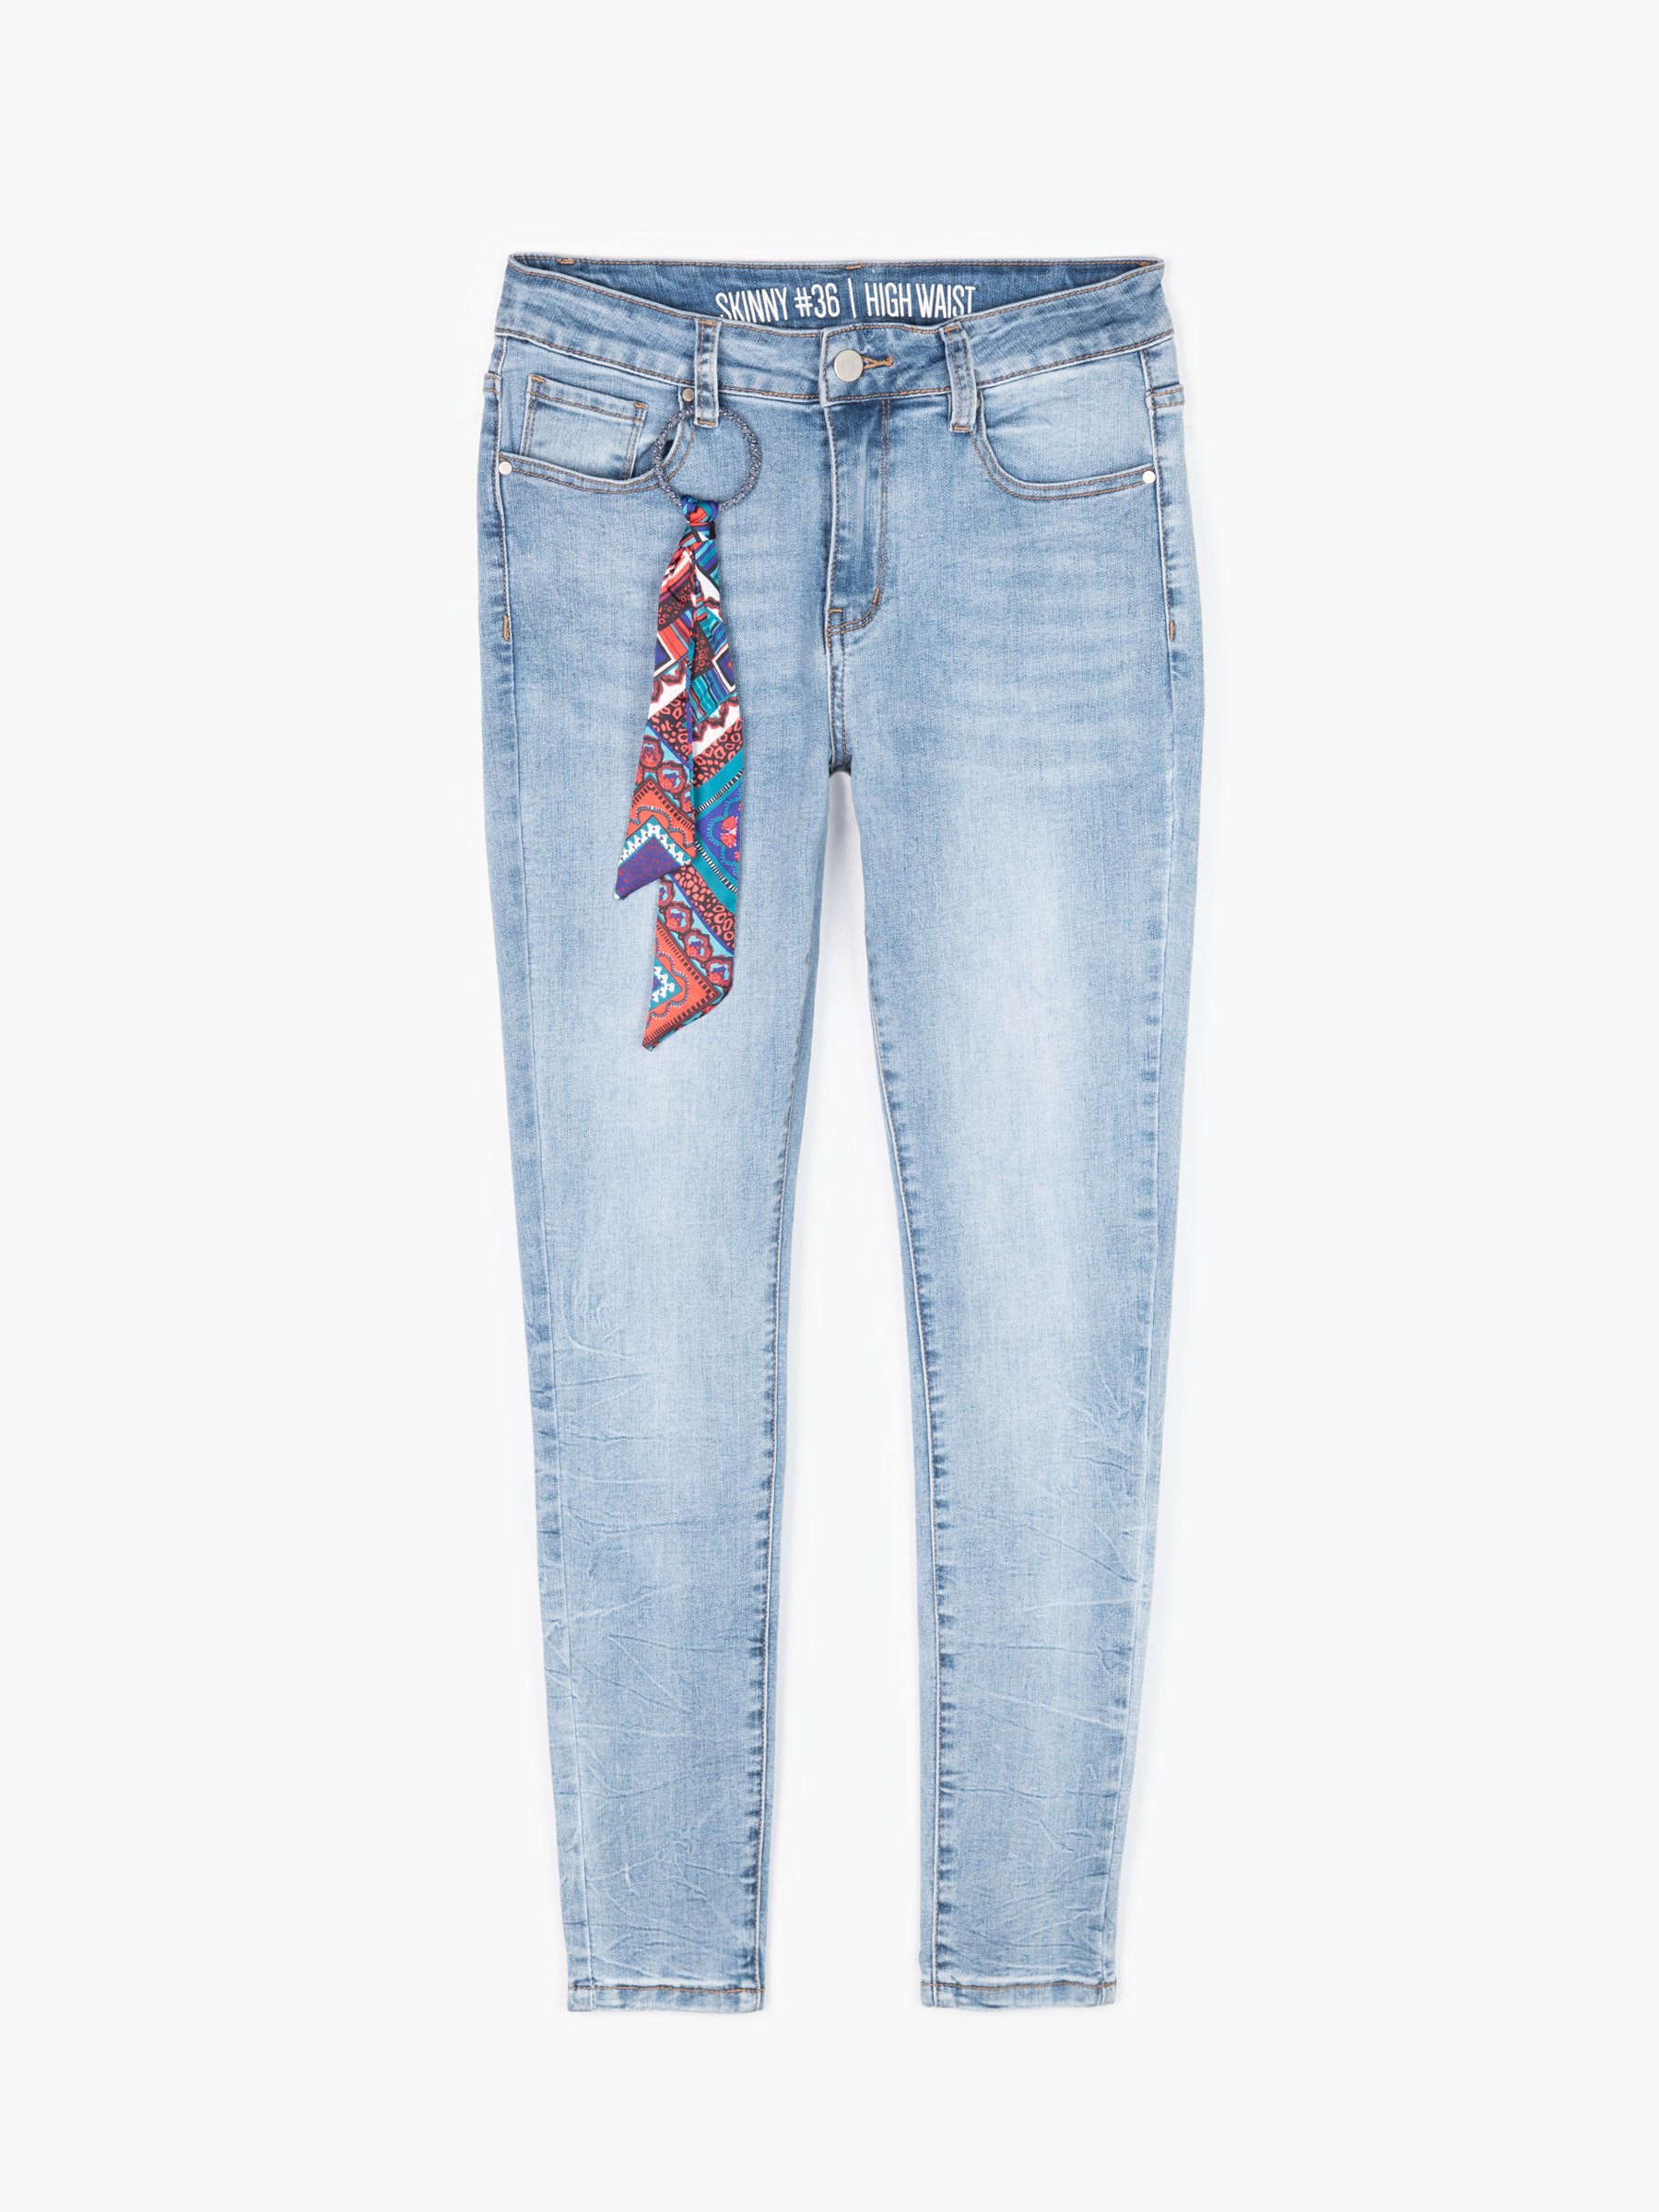 inkt waterbestendig Gewaad Skinny jeans with a decoration | GATE